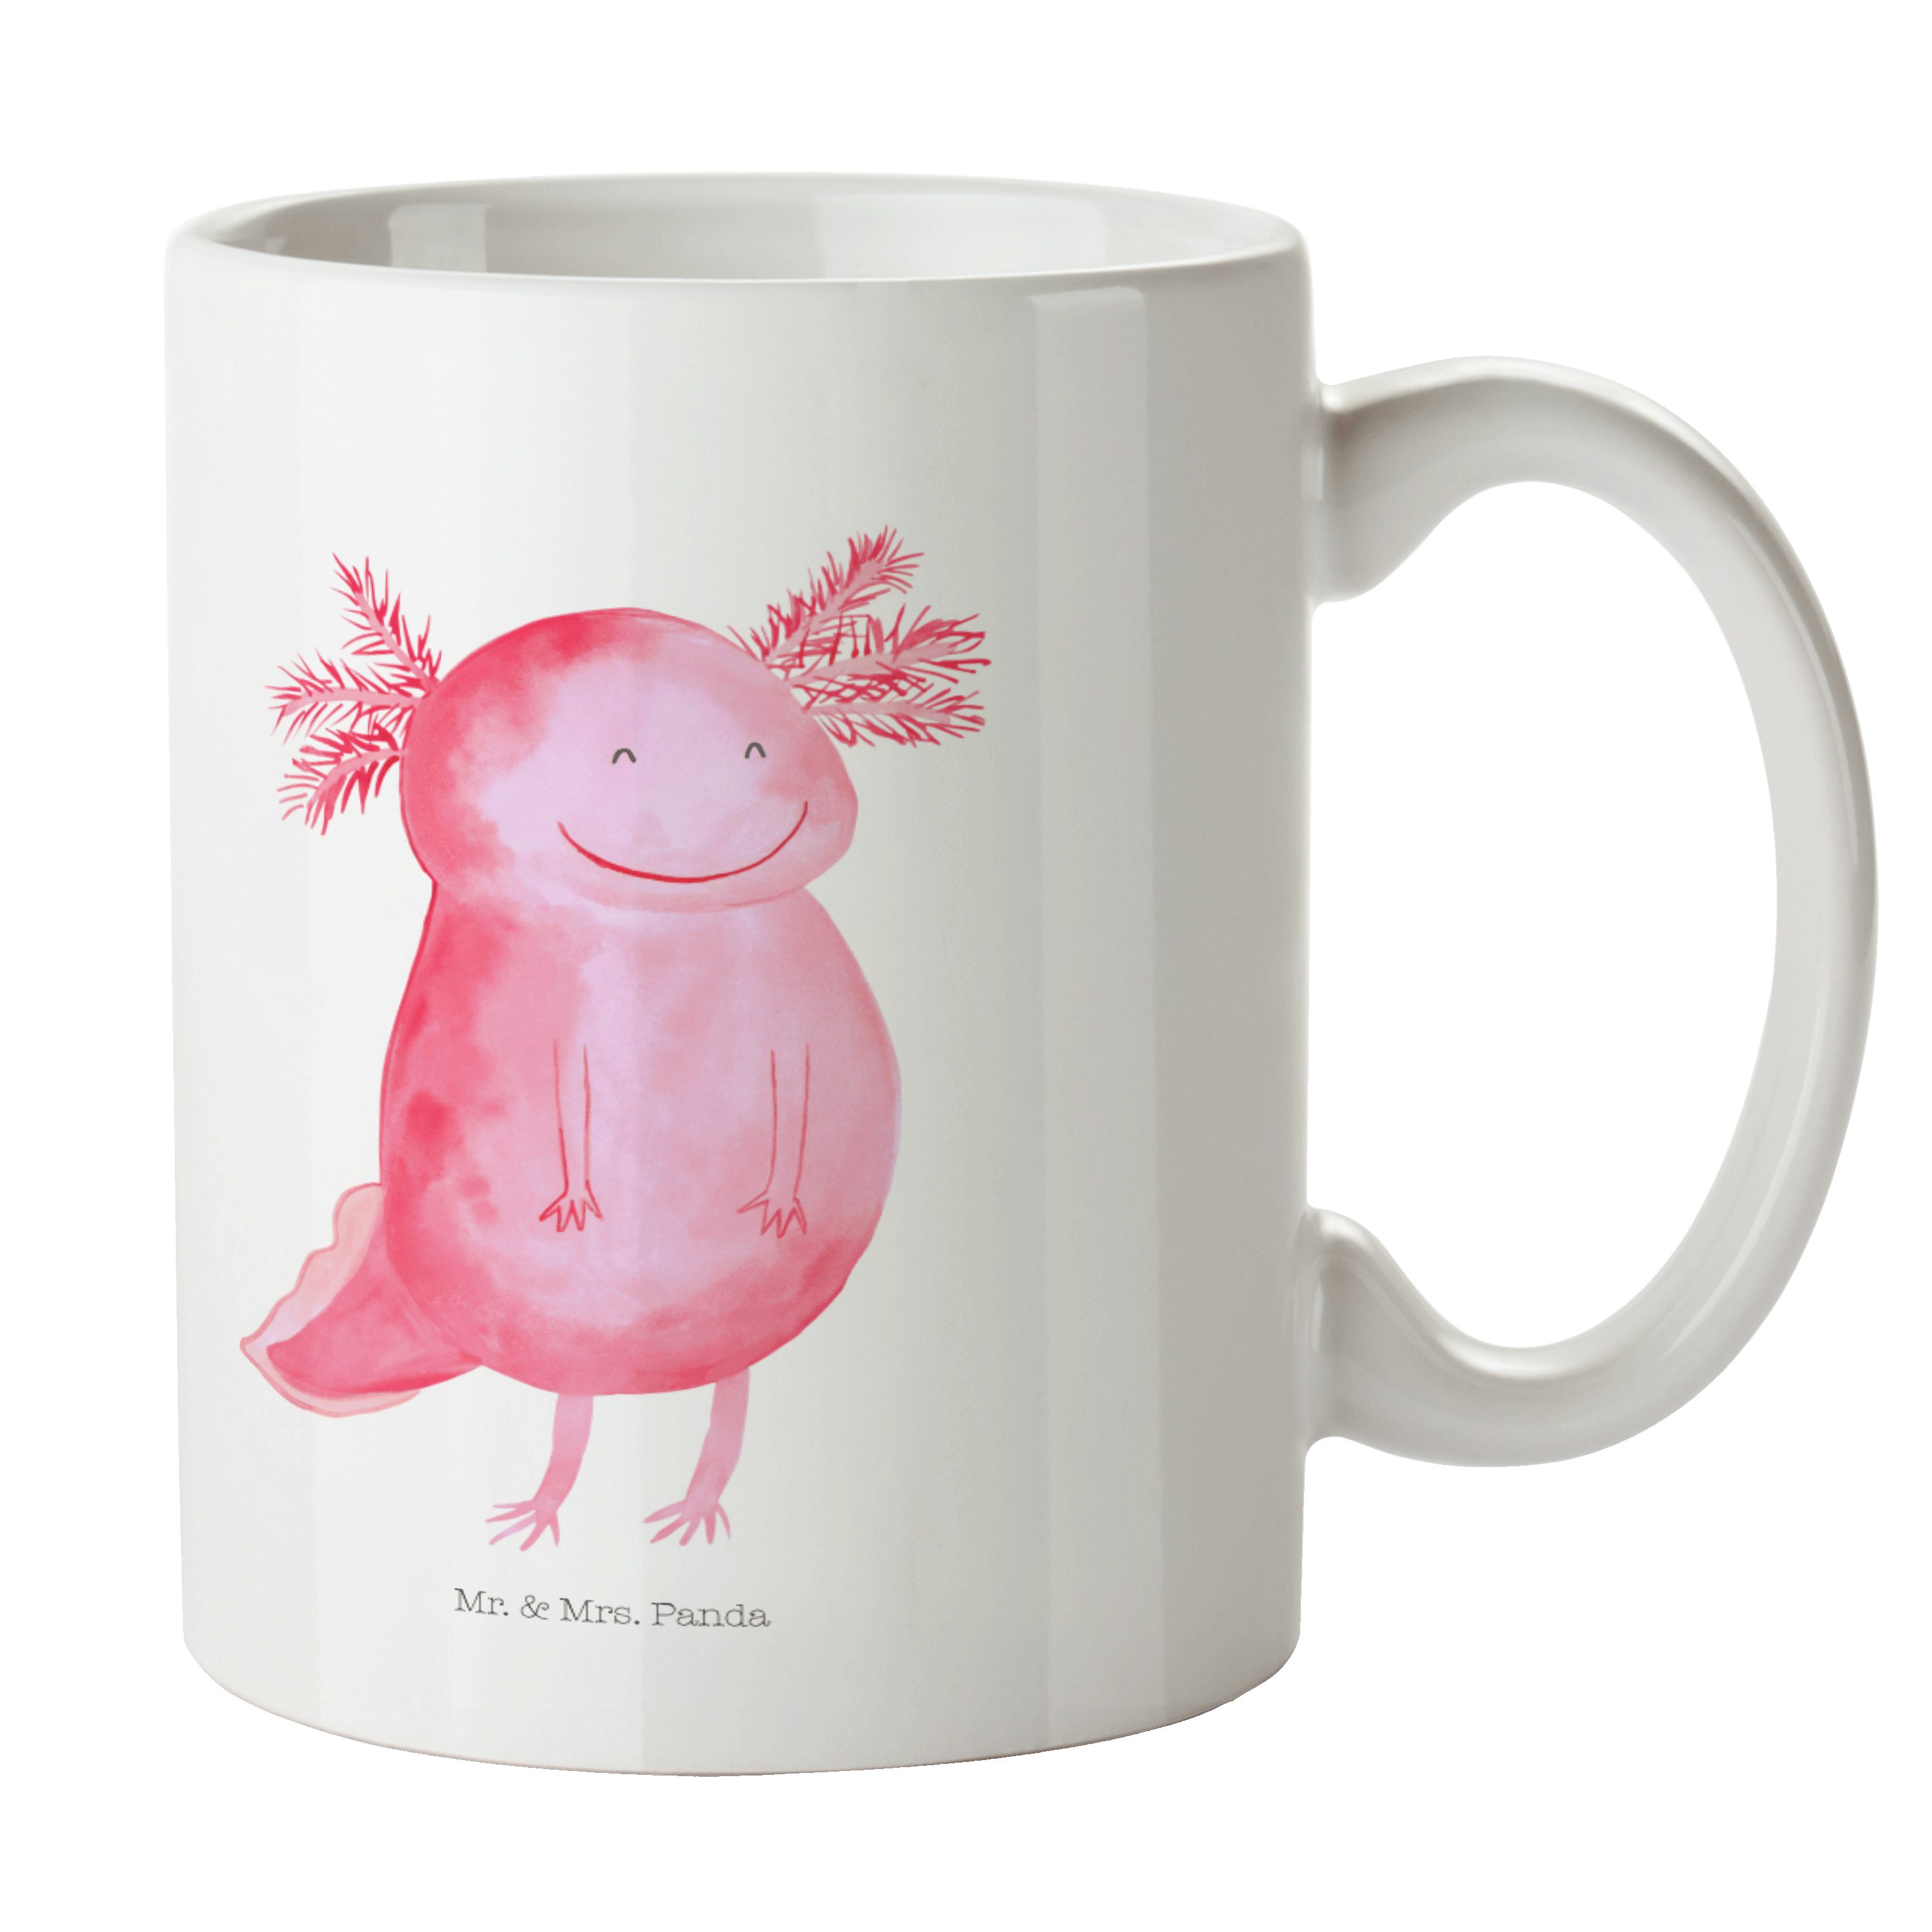 Mr. & Mrs. Panda Tasse Axolotl glücklich - Weiß - Geschenk, Lurch, Tasse, Molch, Keramiktass, Keramik